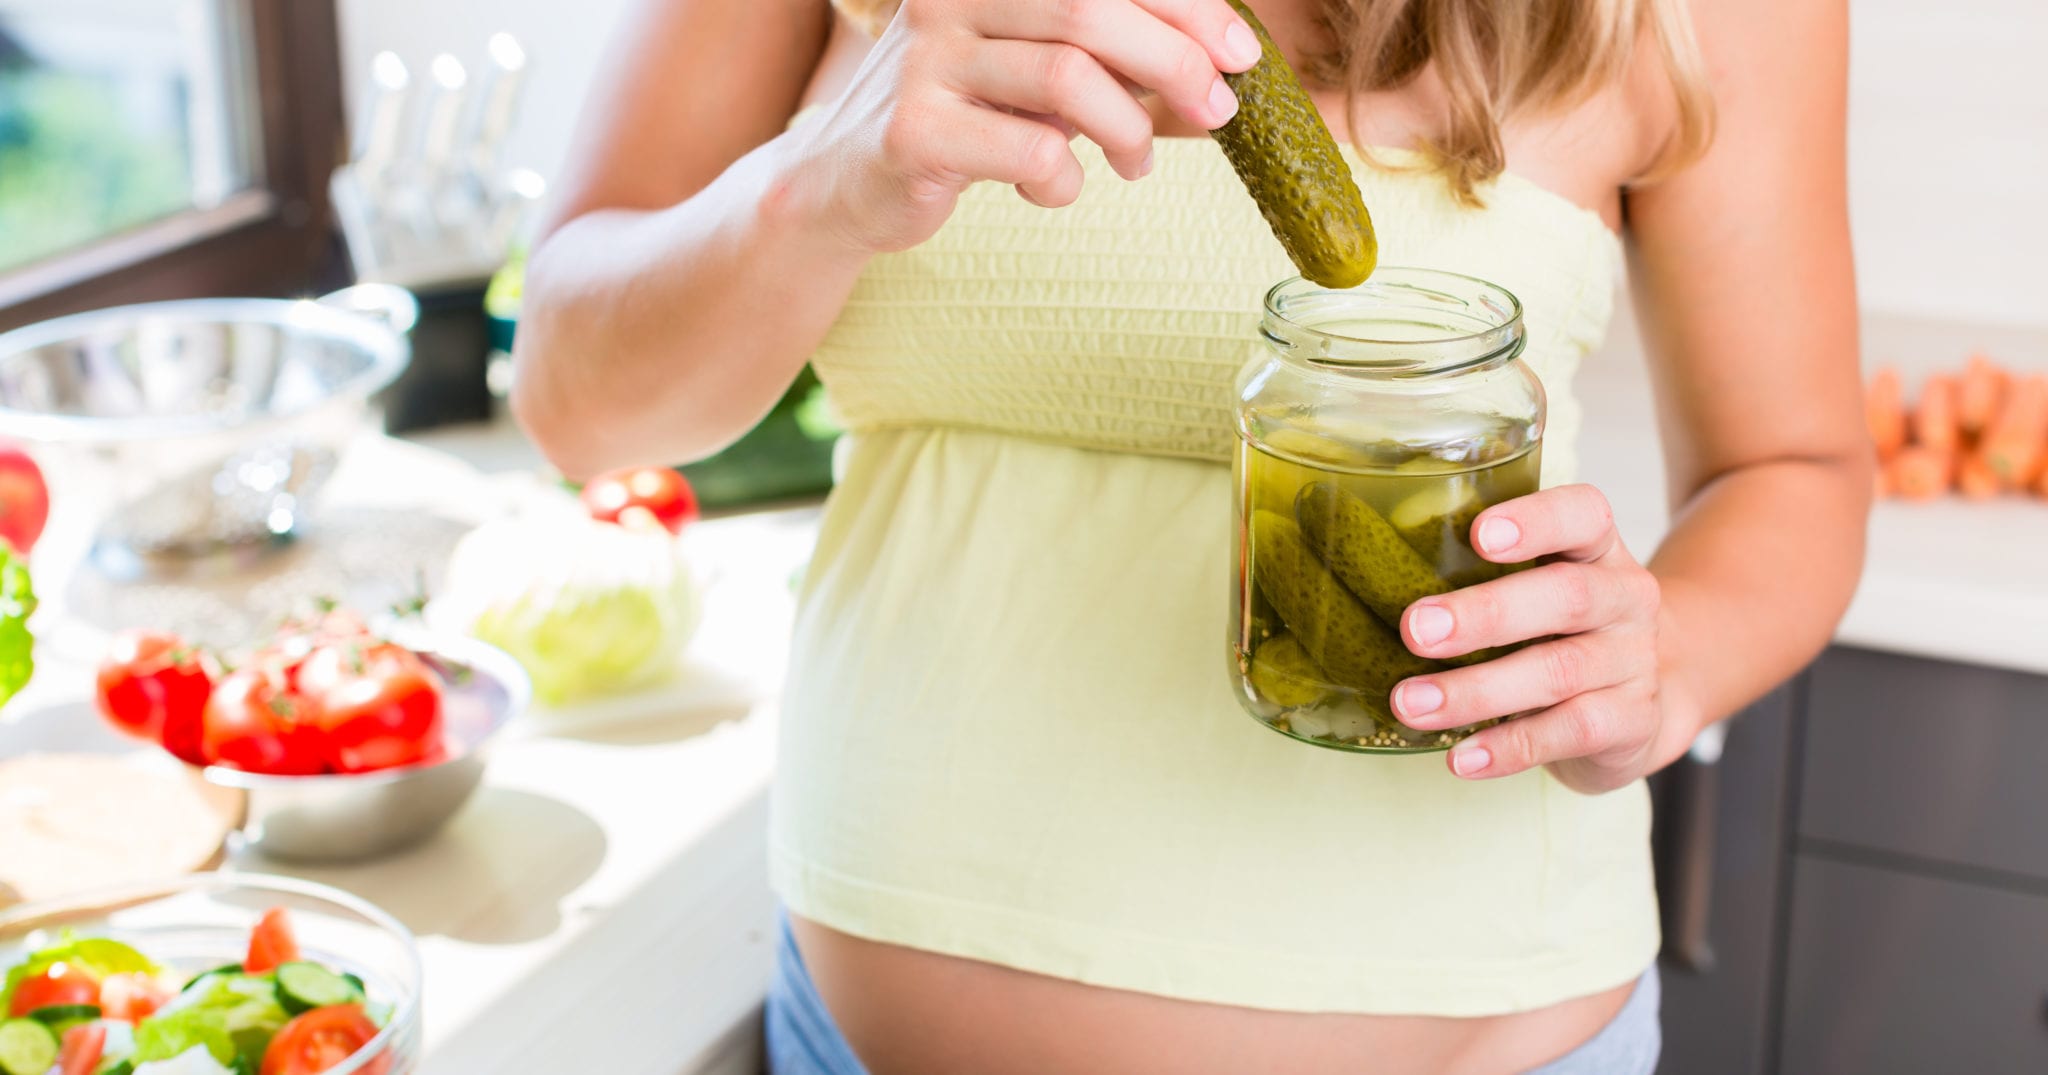 Top 10 Grossest Pregnancy Cravings